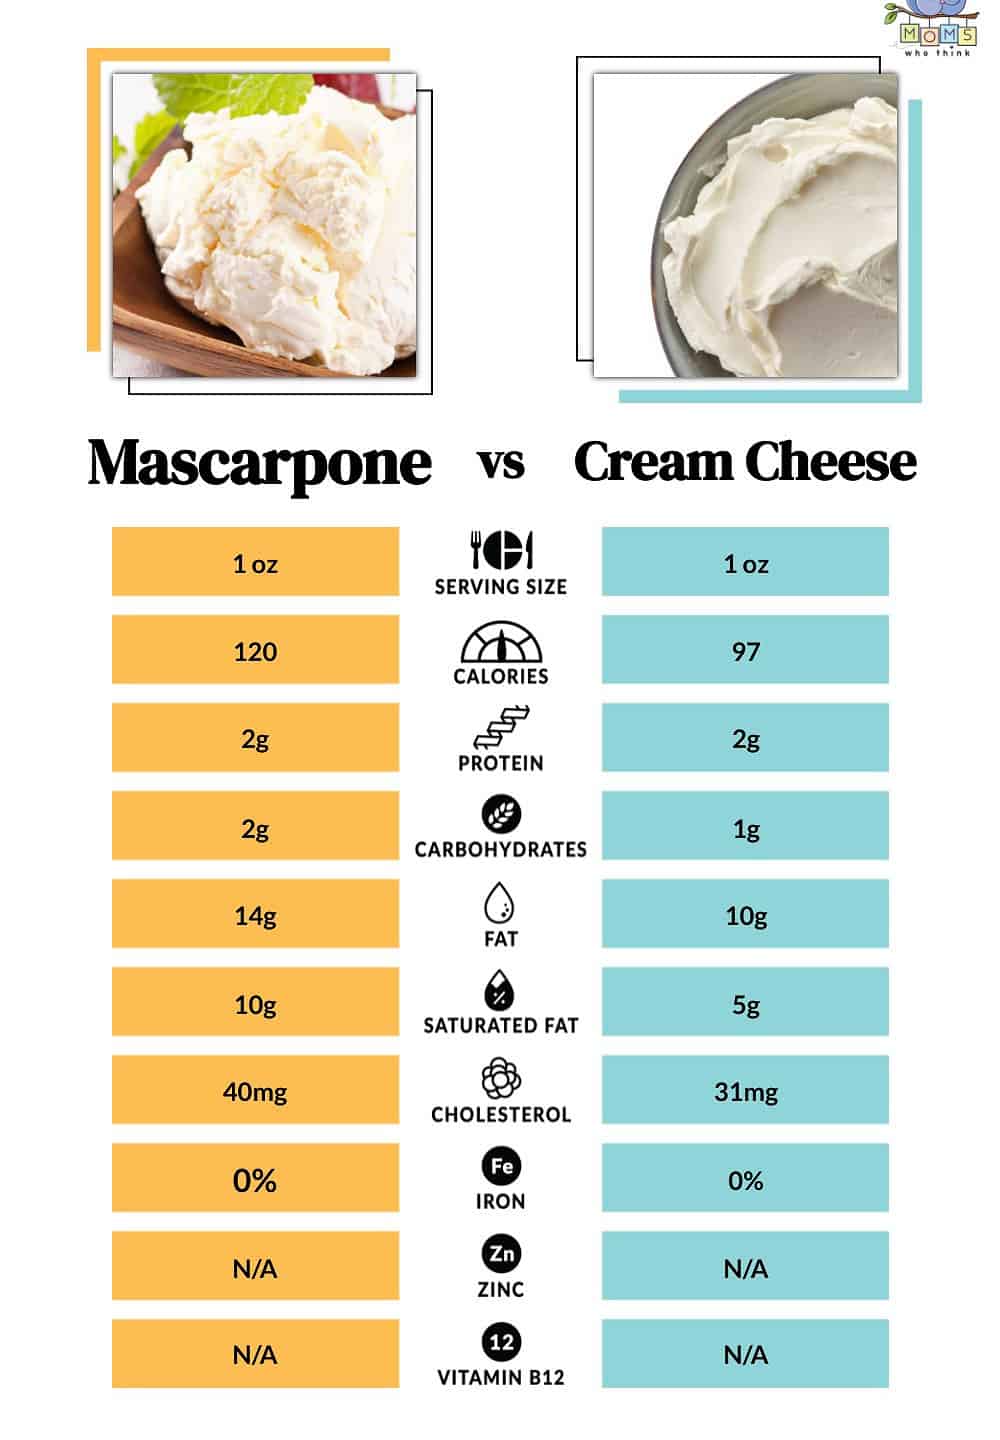 Mascarpone vs Cream Cheese Nutritional Differences